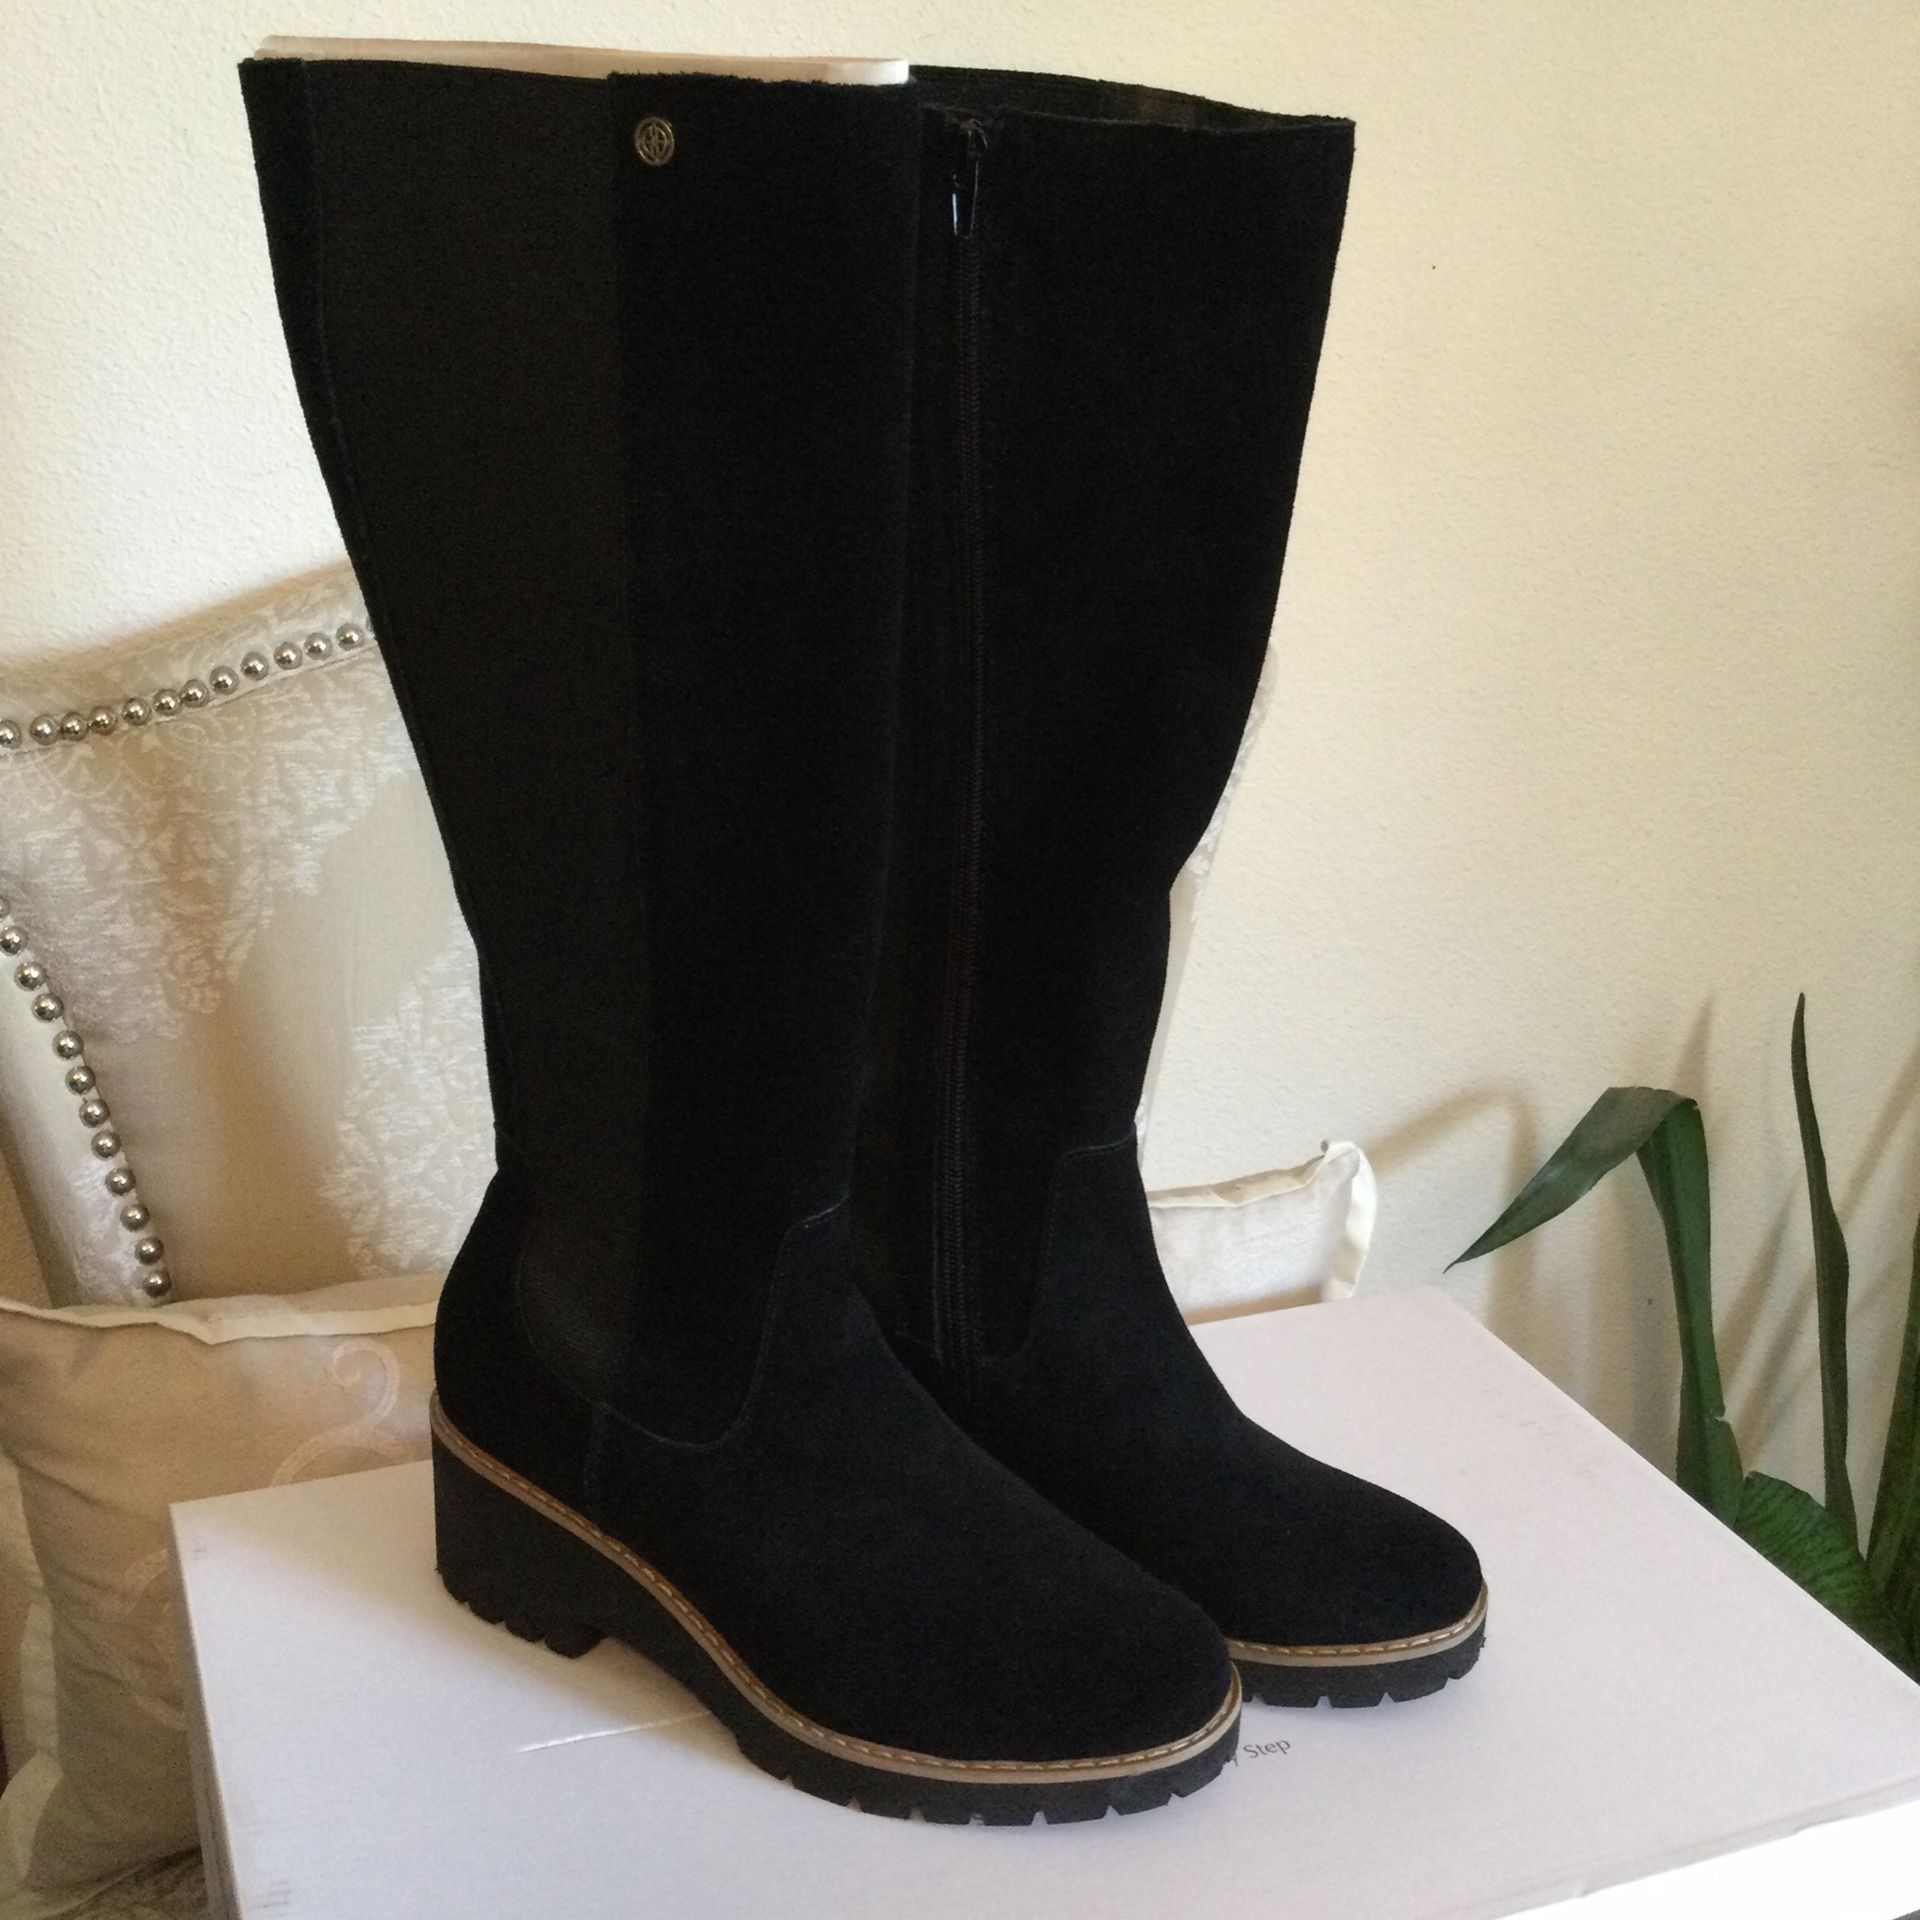  Gianni Bernini Black suede boots Size 8 $60